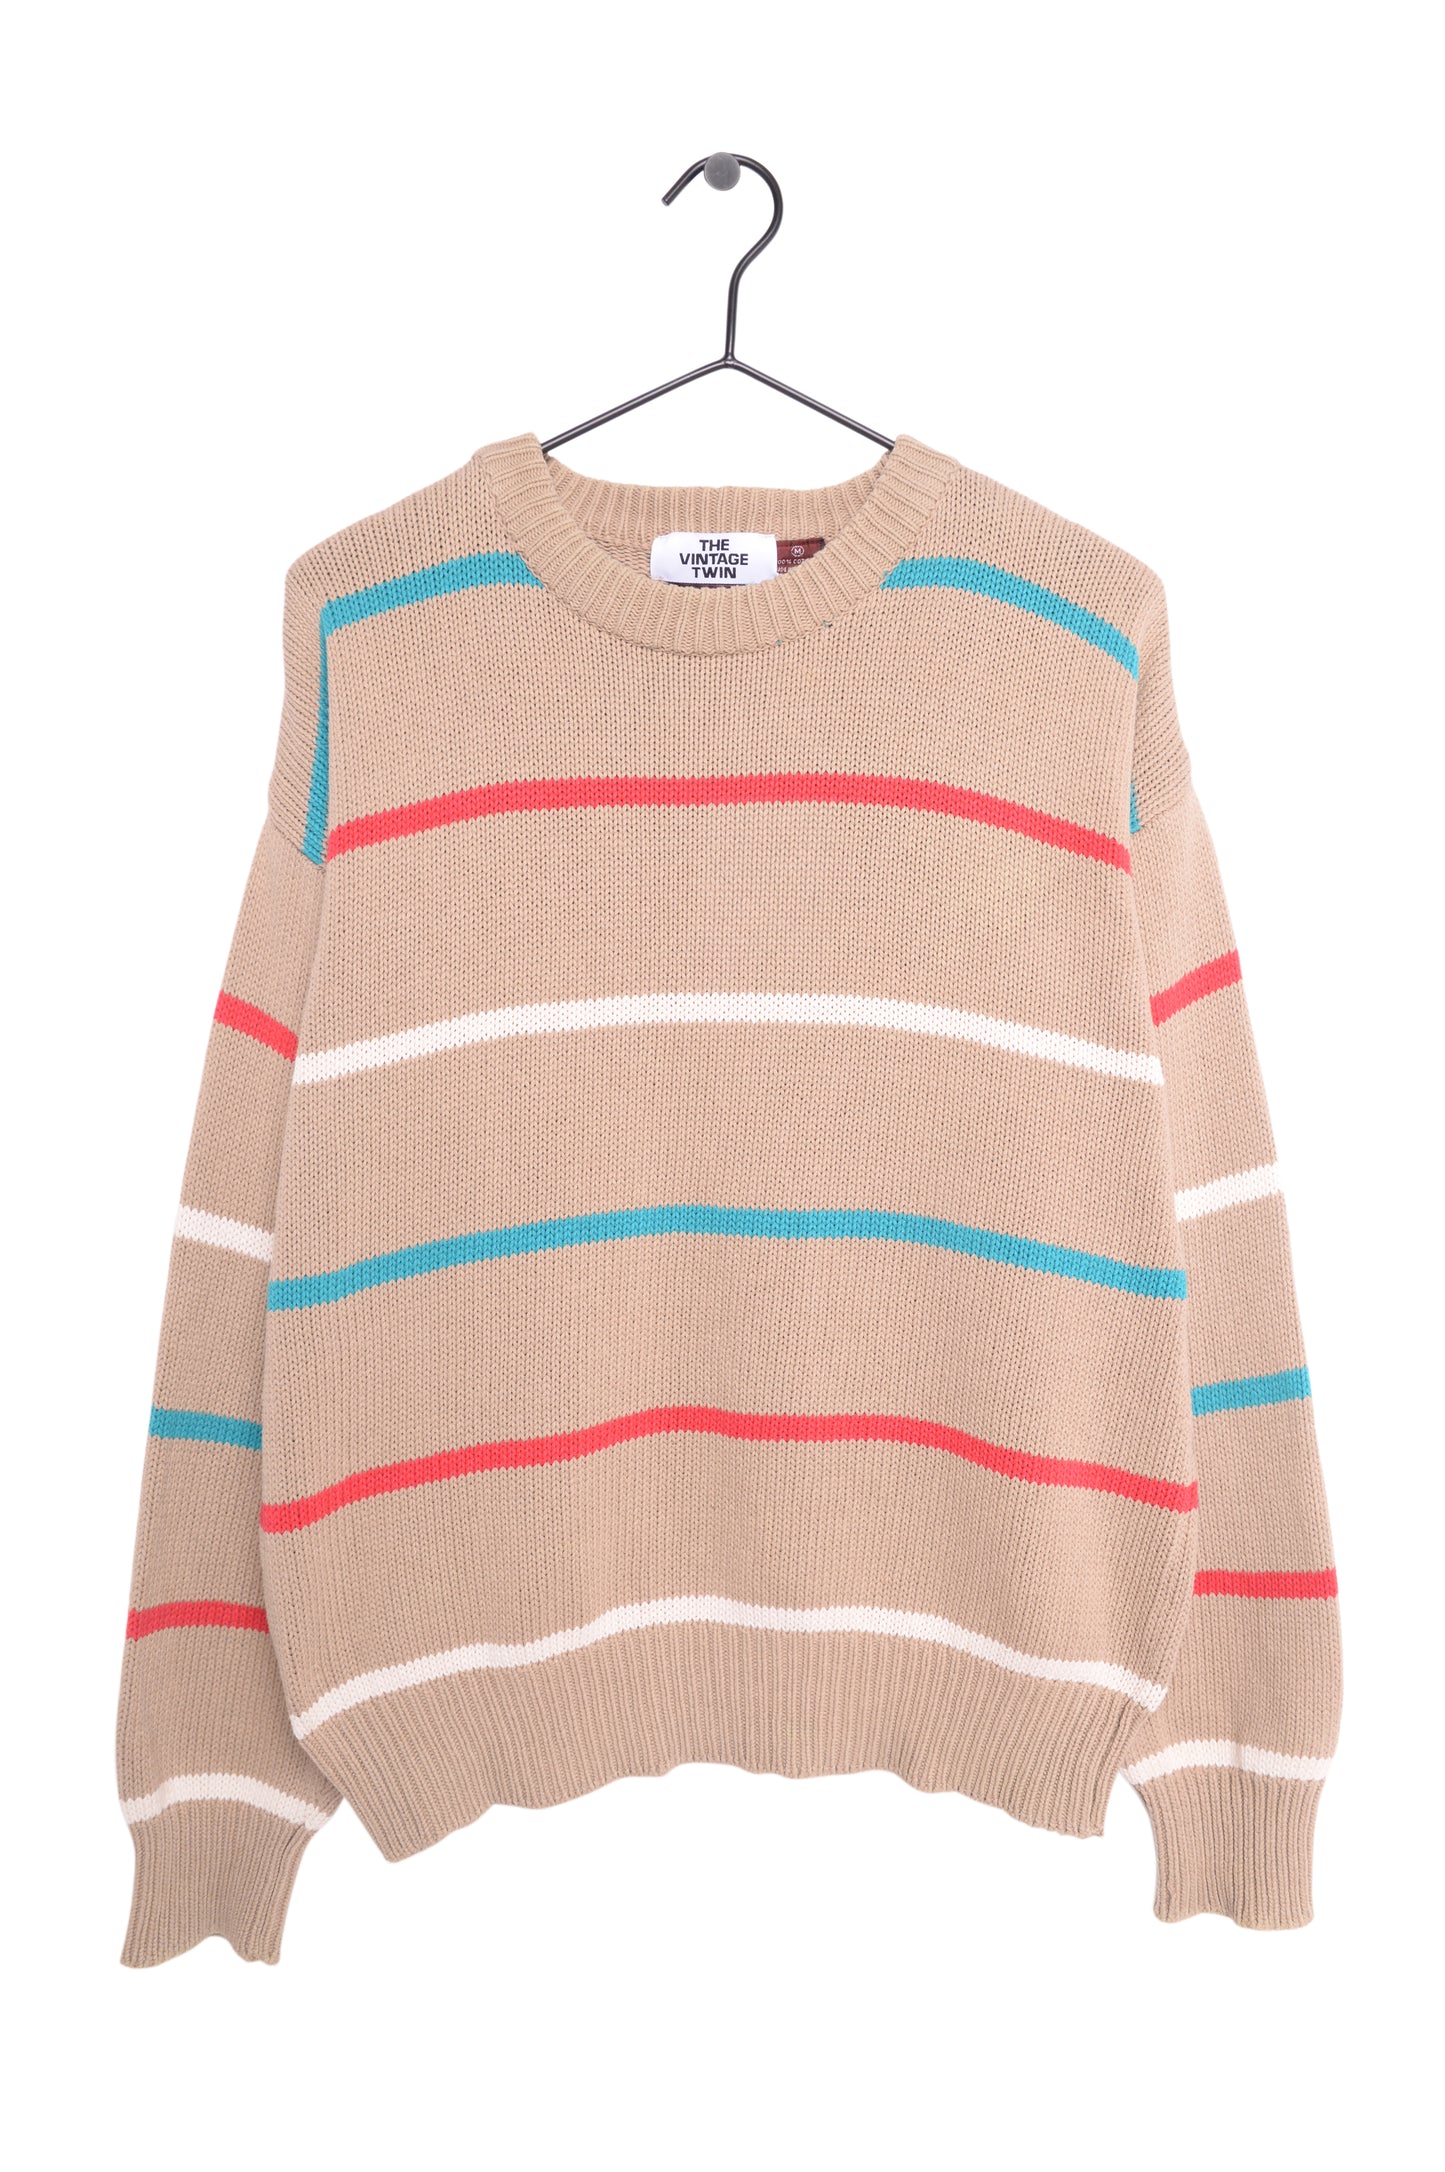 1990s Striped Sweater